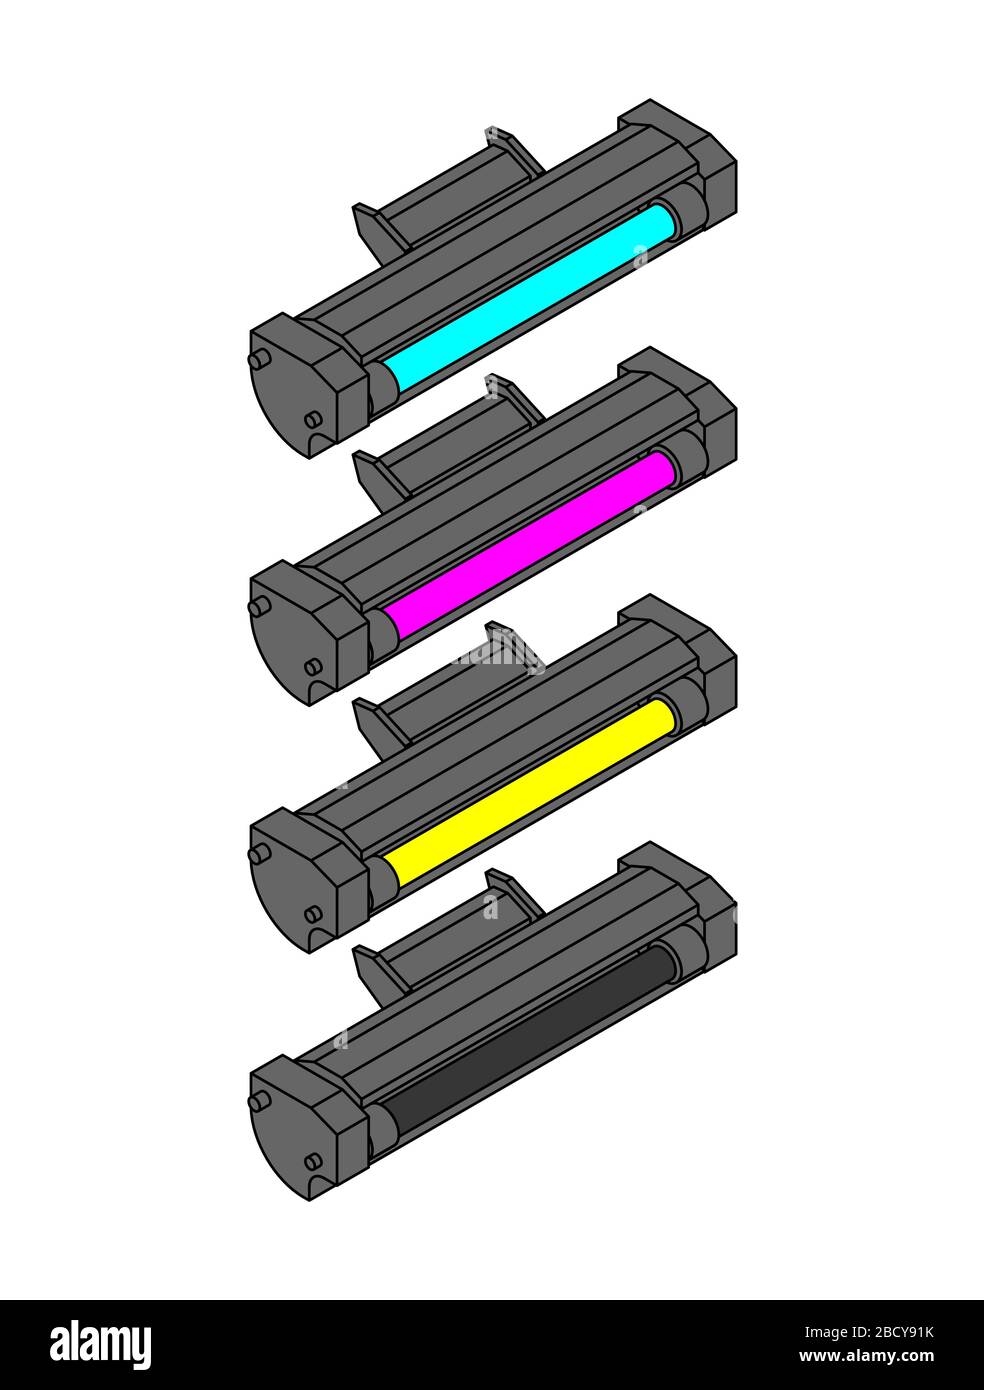 Printer toner cartridge CMYK set. Cyan and Magenta. Yellow and Key color. ink  Laser Jet printer Stock Vector Image & Art - Alamy